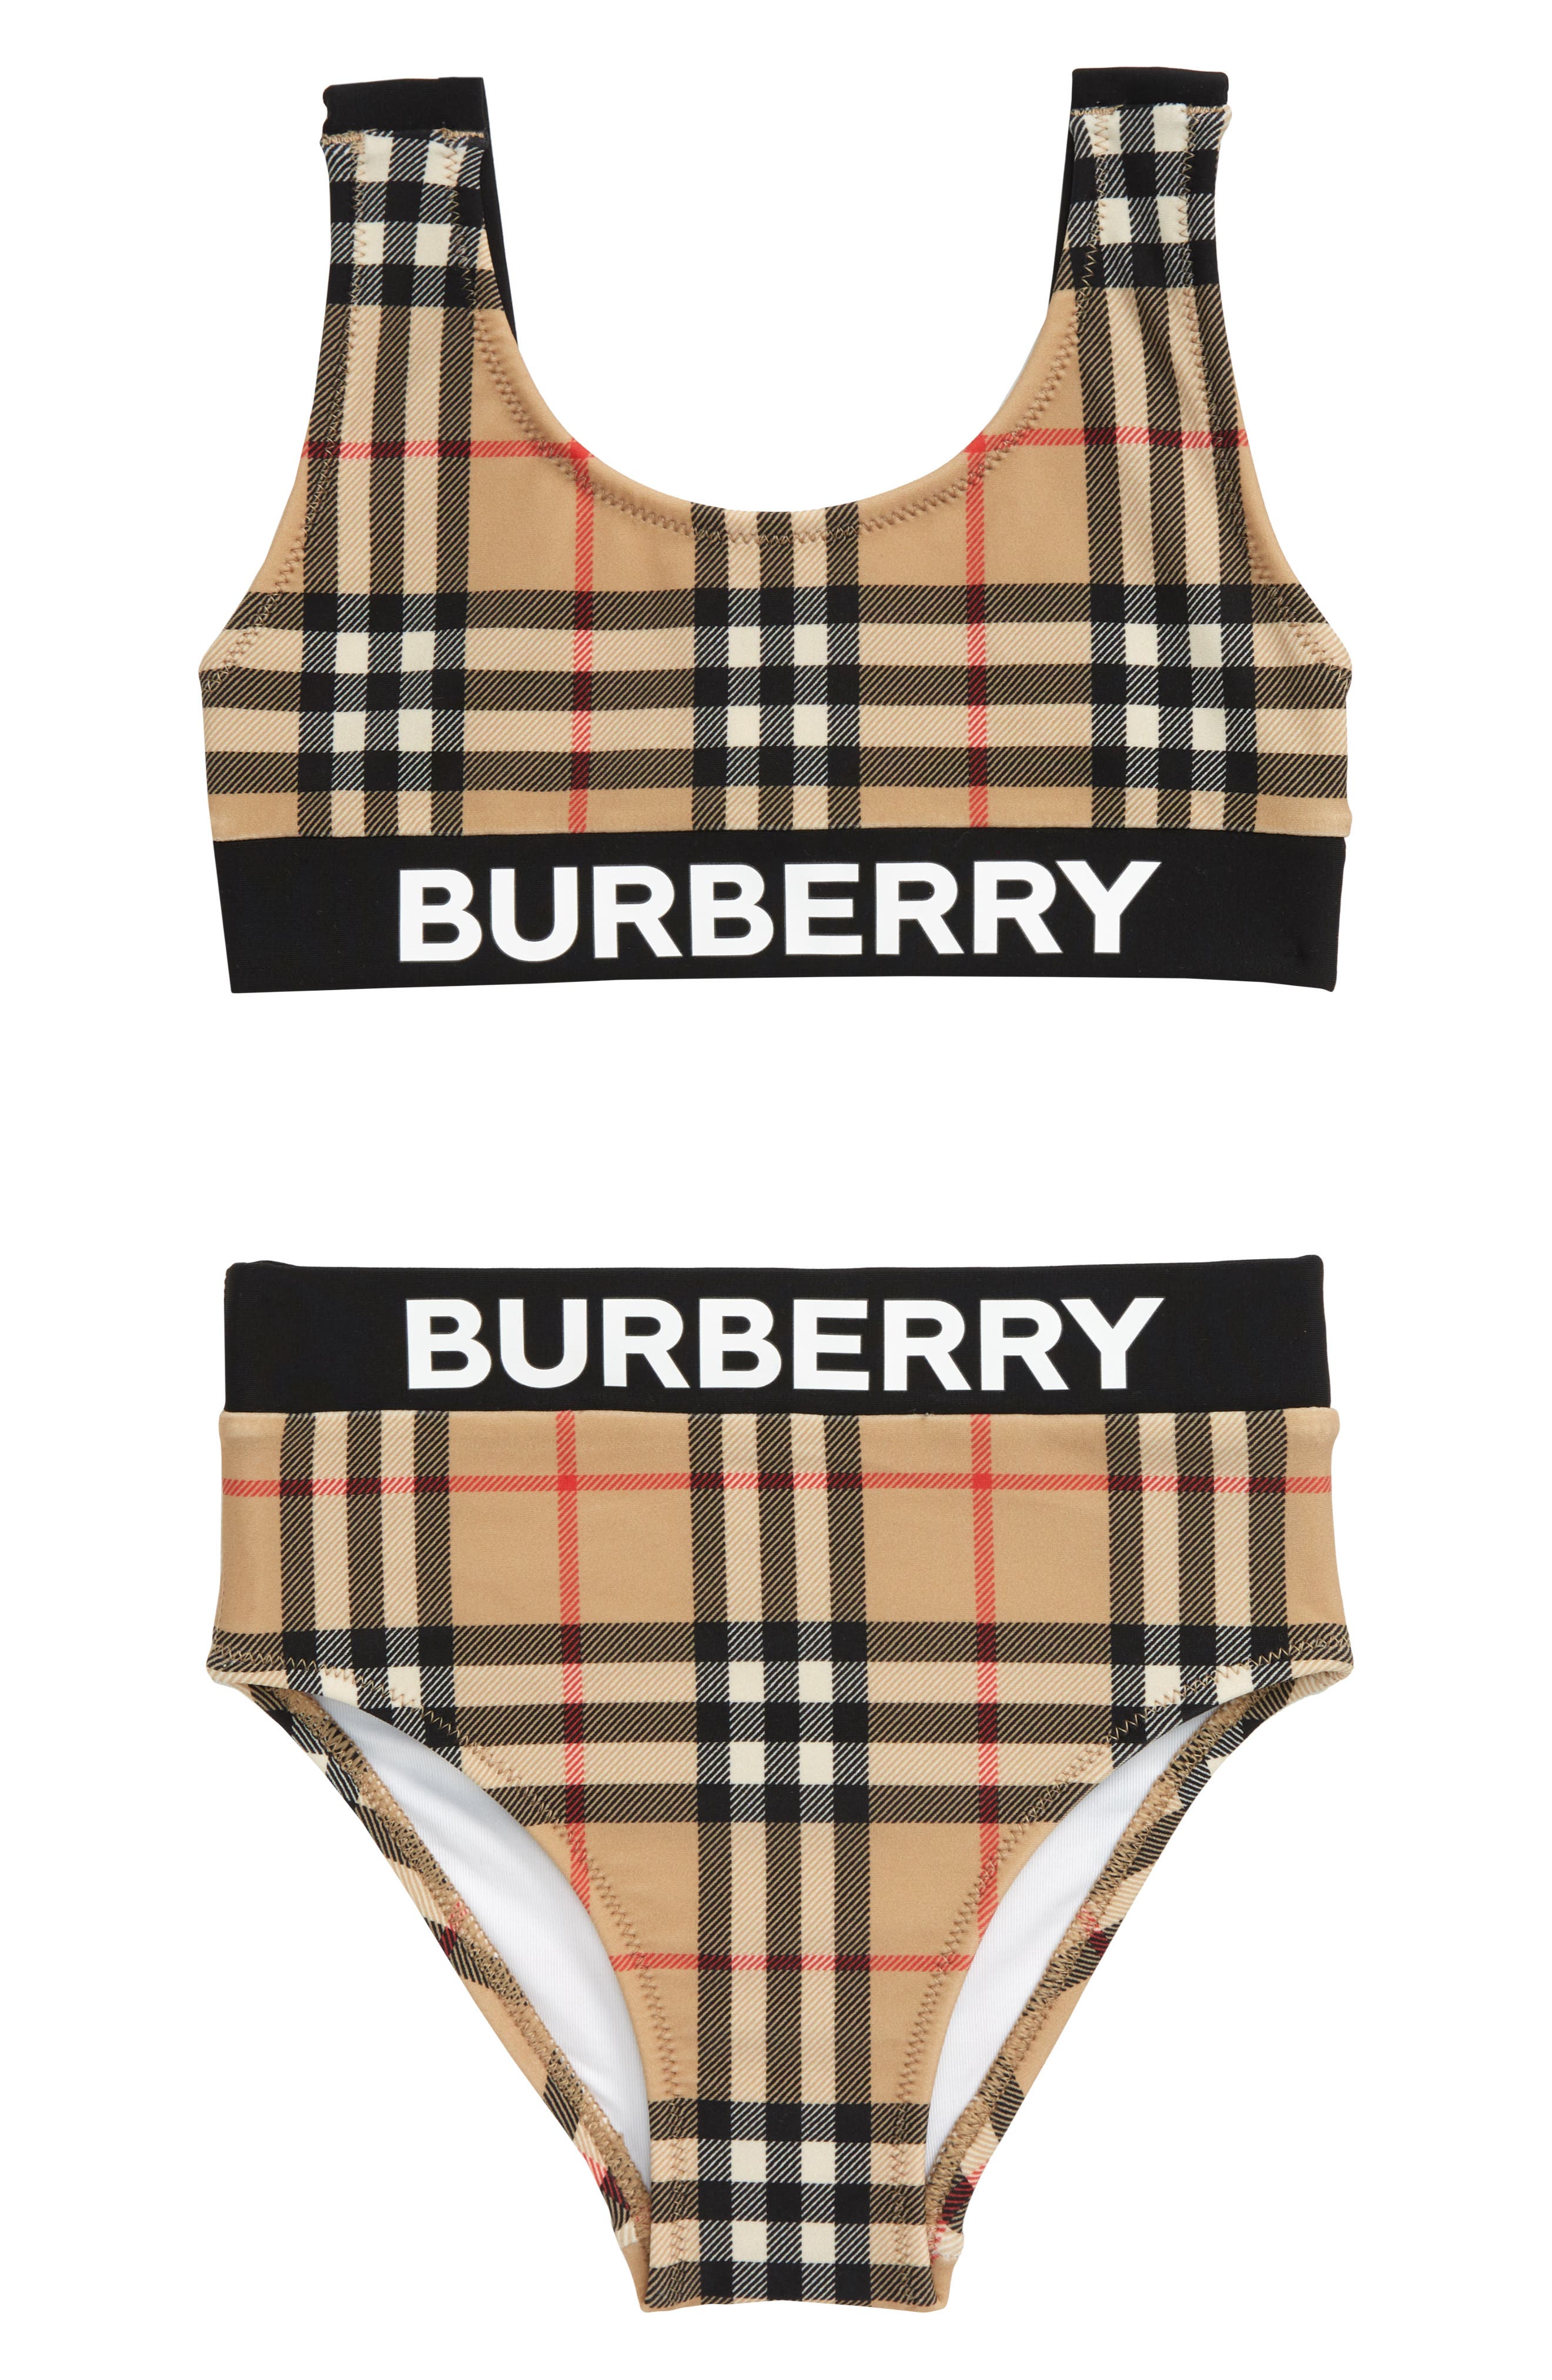 burberry childrens clothes